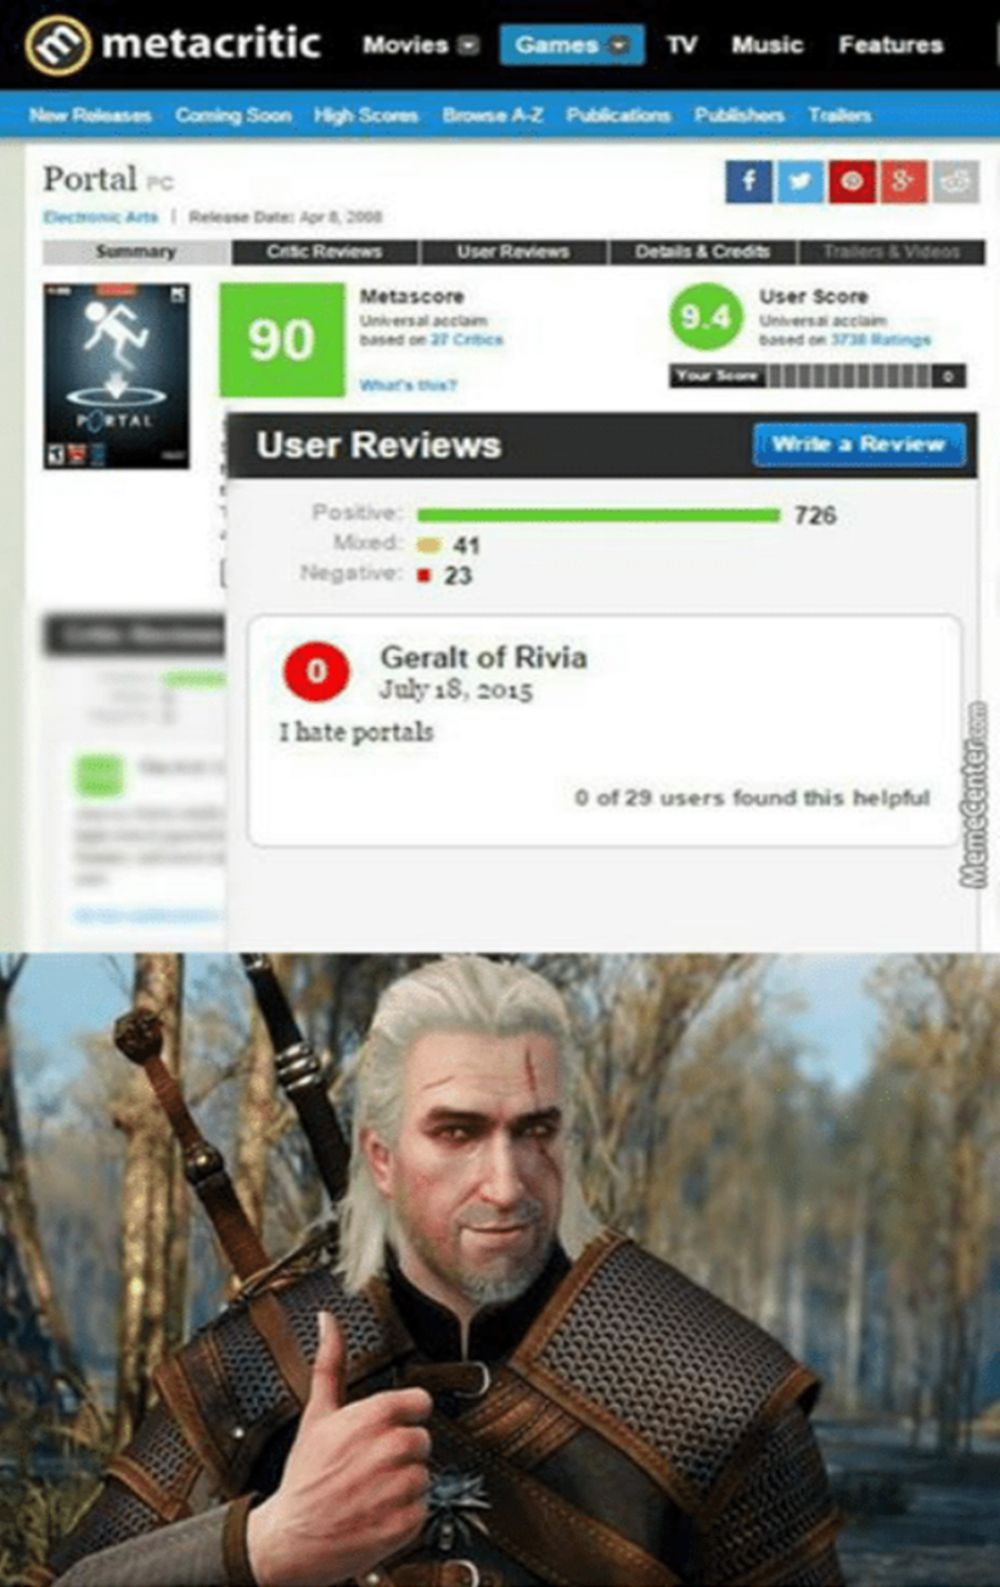 Geralt's Metacritic review of Portal meme